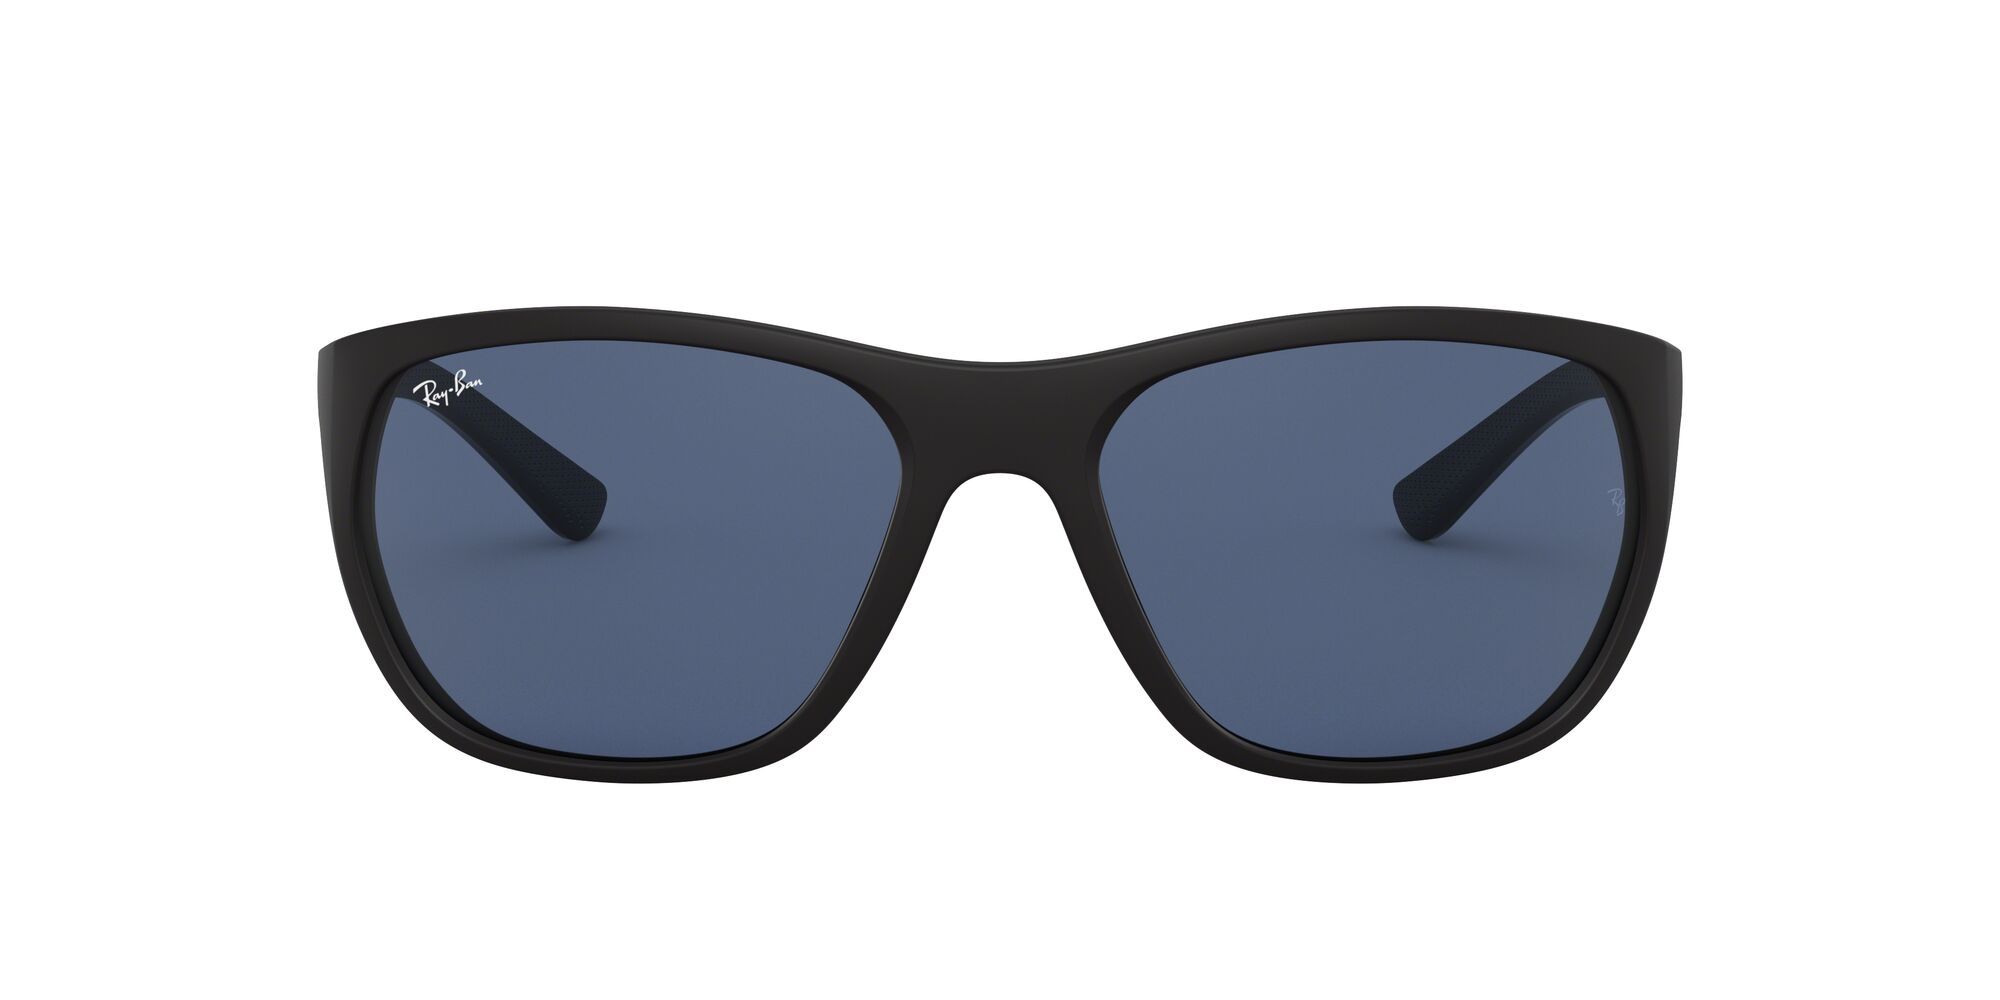 Ray-Ban Clubmaster Sunglasses - Black/Green Polarized - MODA3